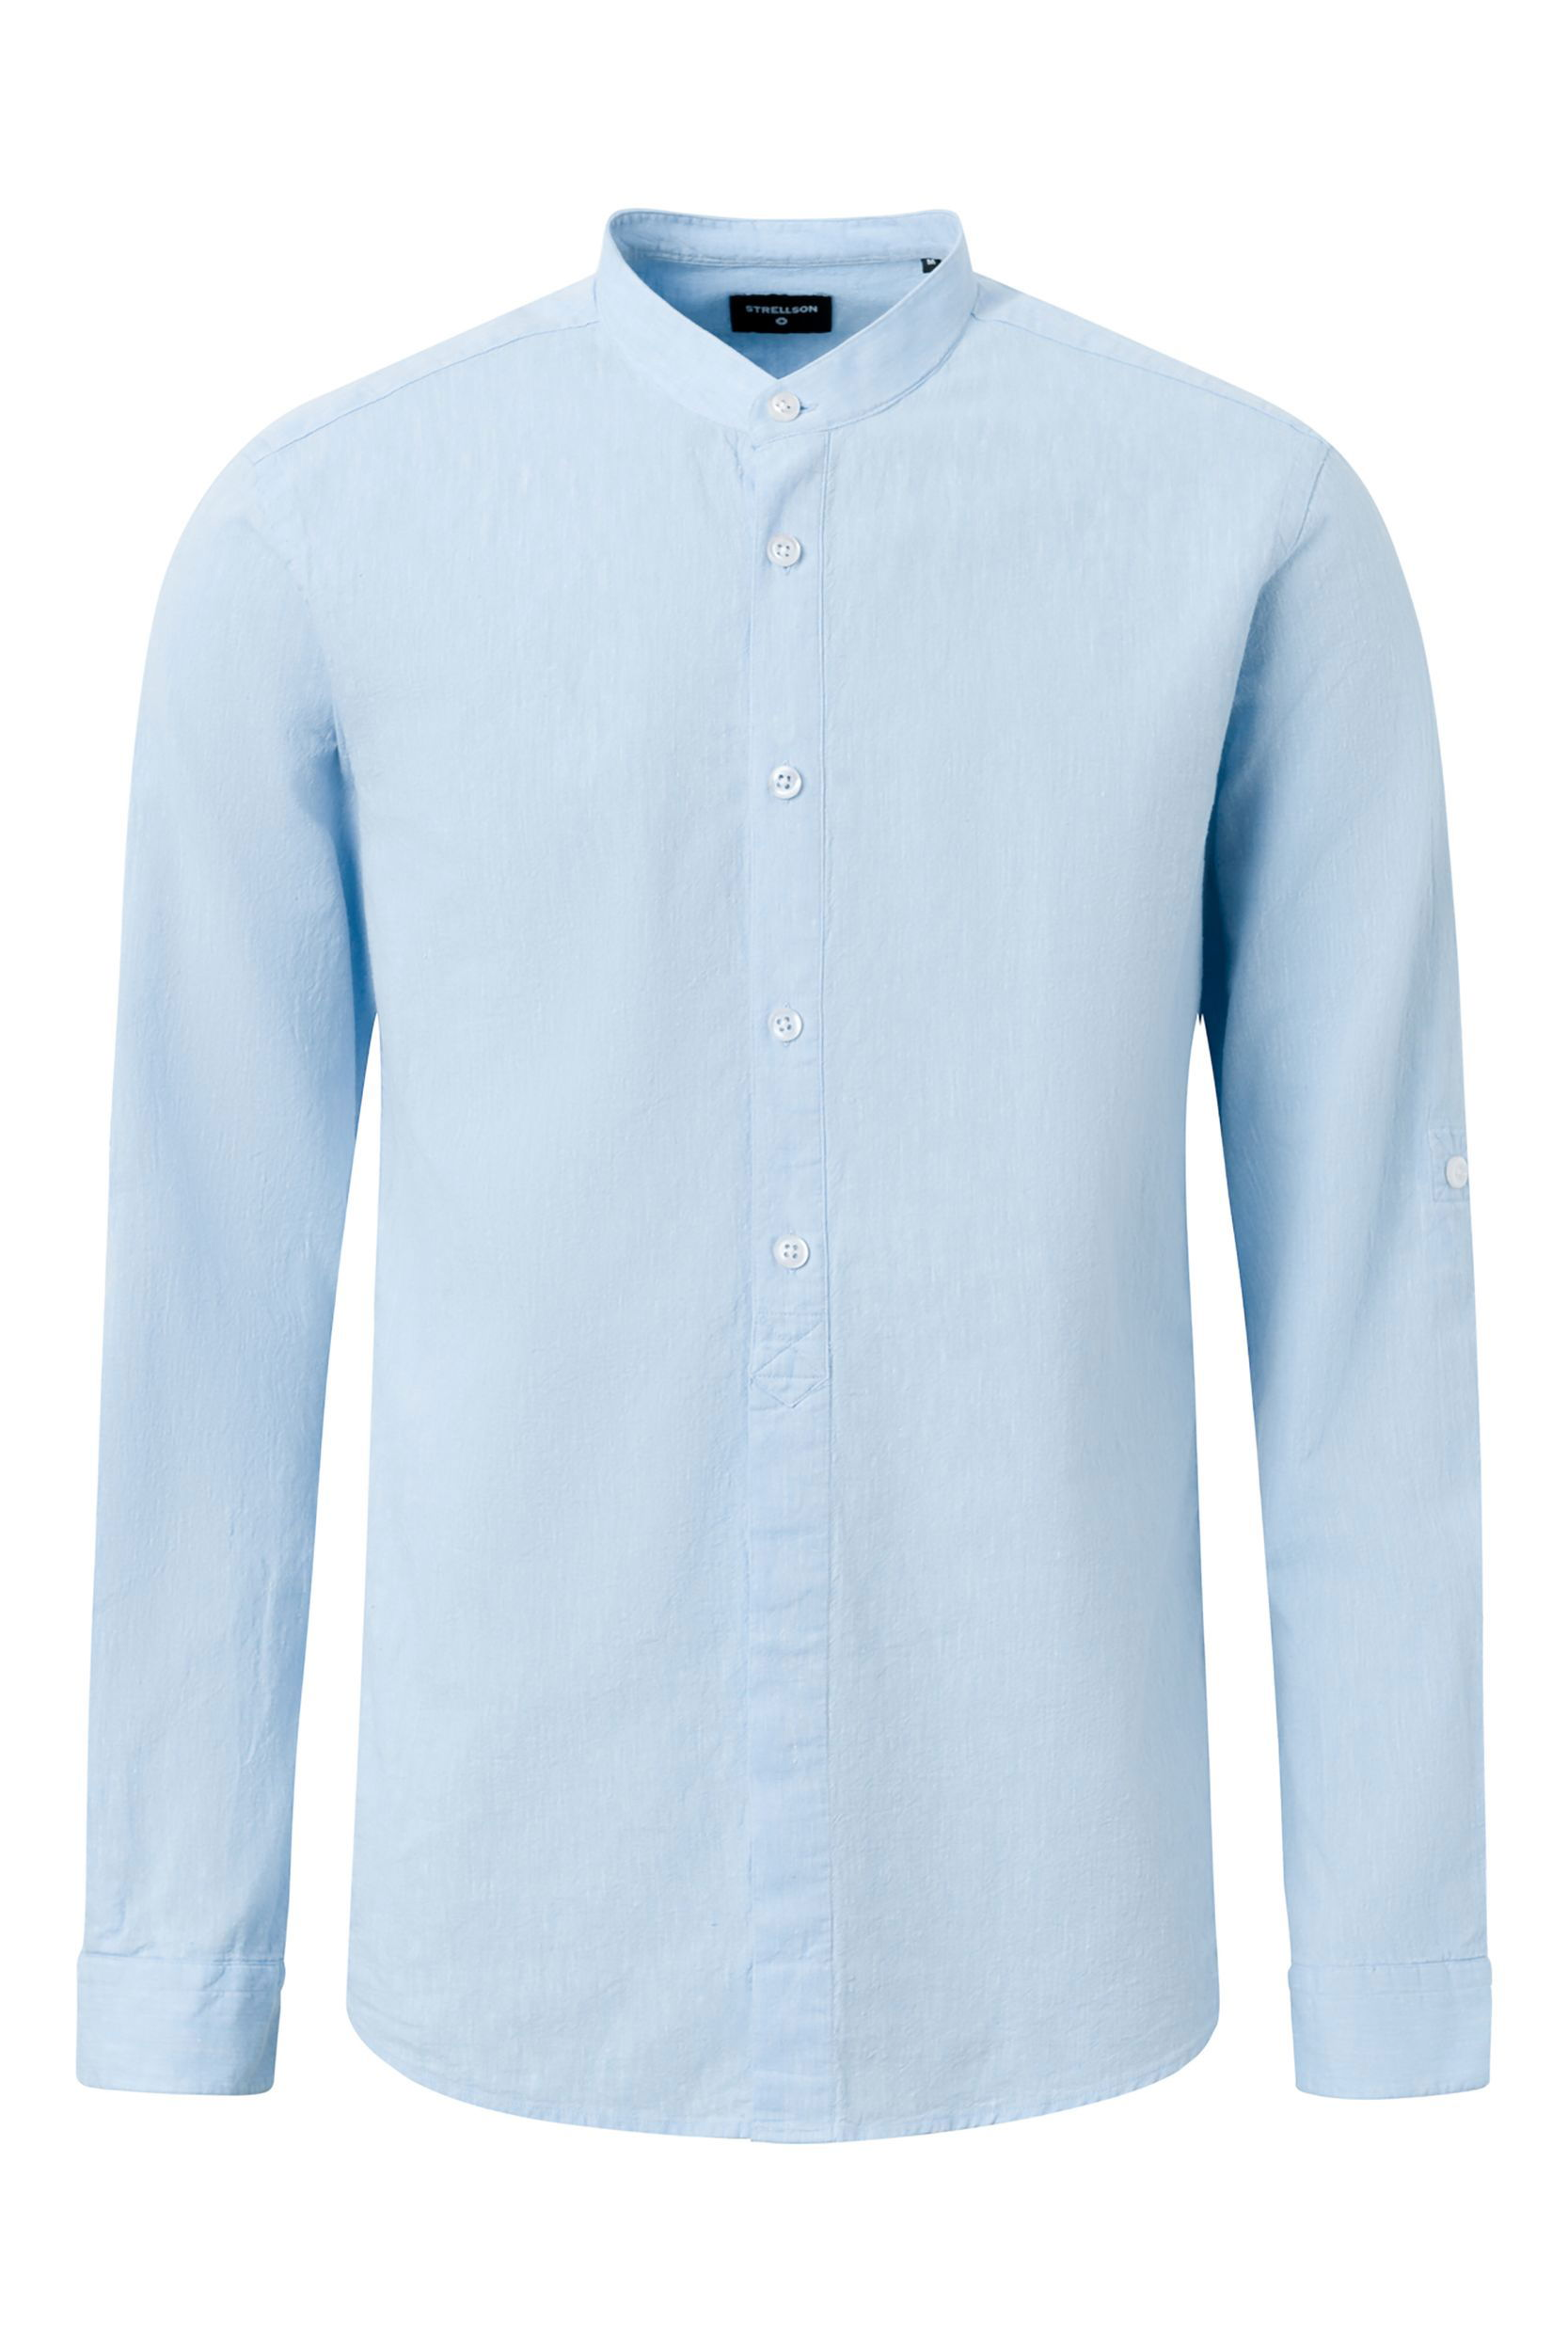 Strellson |  Strellson Hemd Regular Fit  | XL | lt/pastel blue